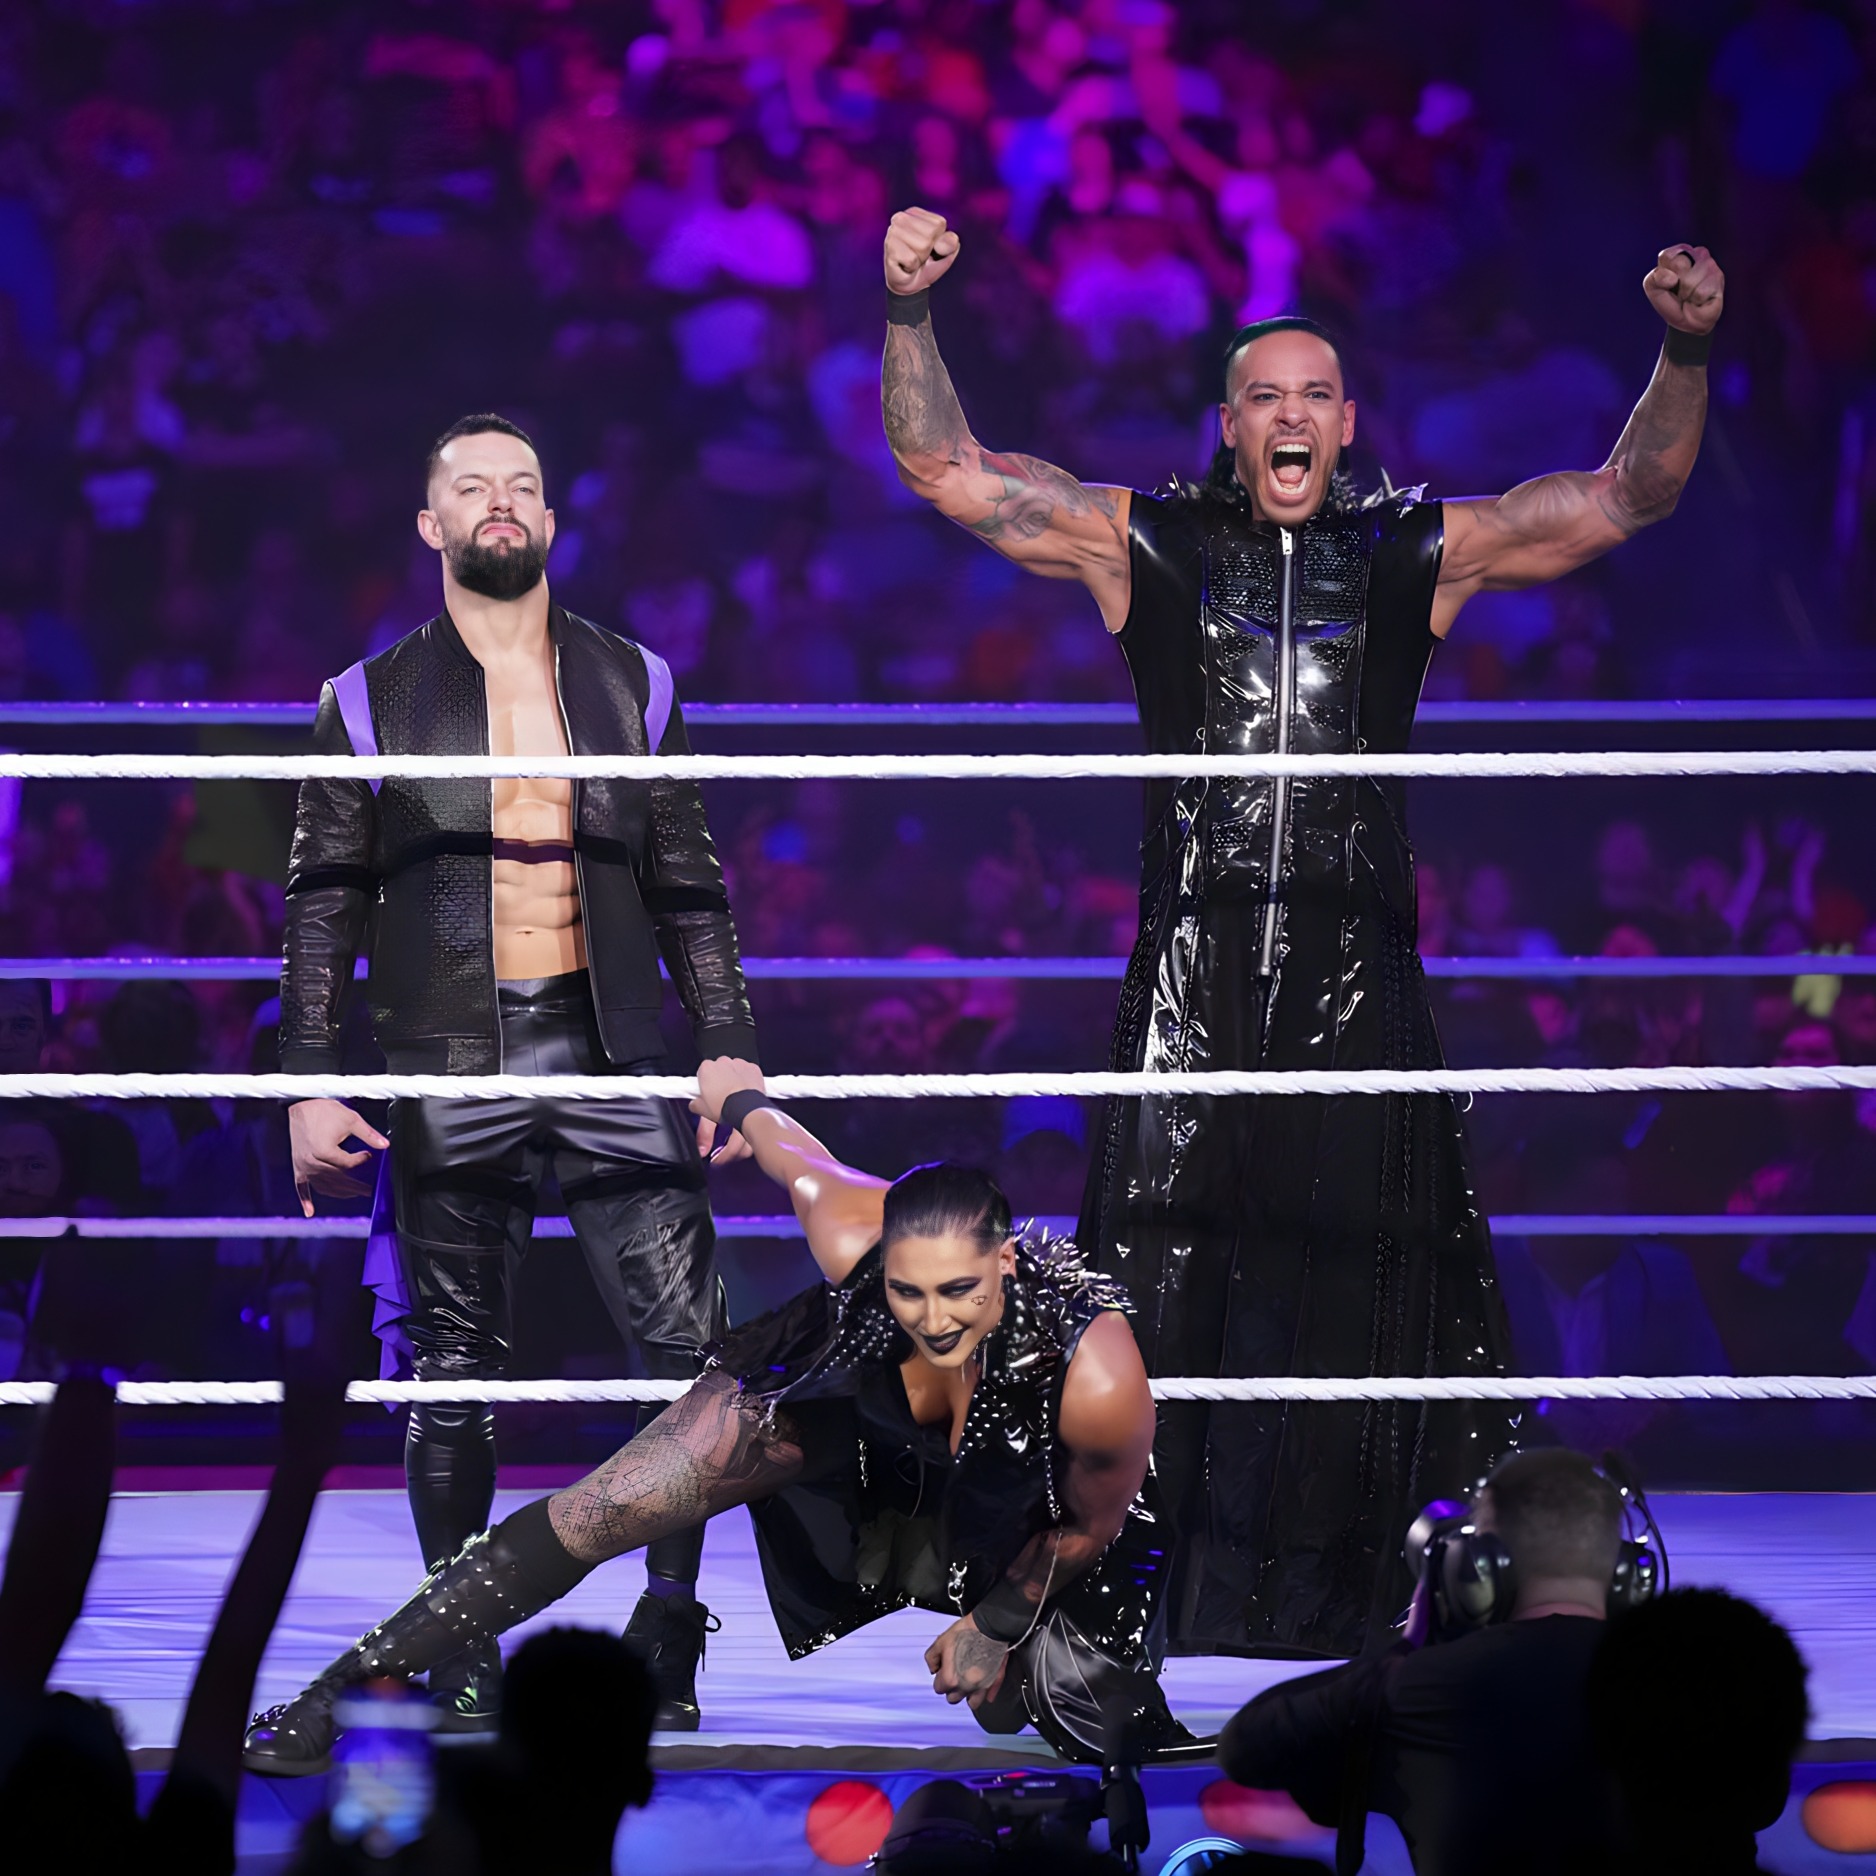 WINC Podcast (10/16): WWE Raw Review, McMahon 'marginalized' per Meltzer